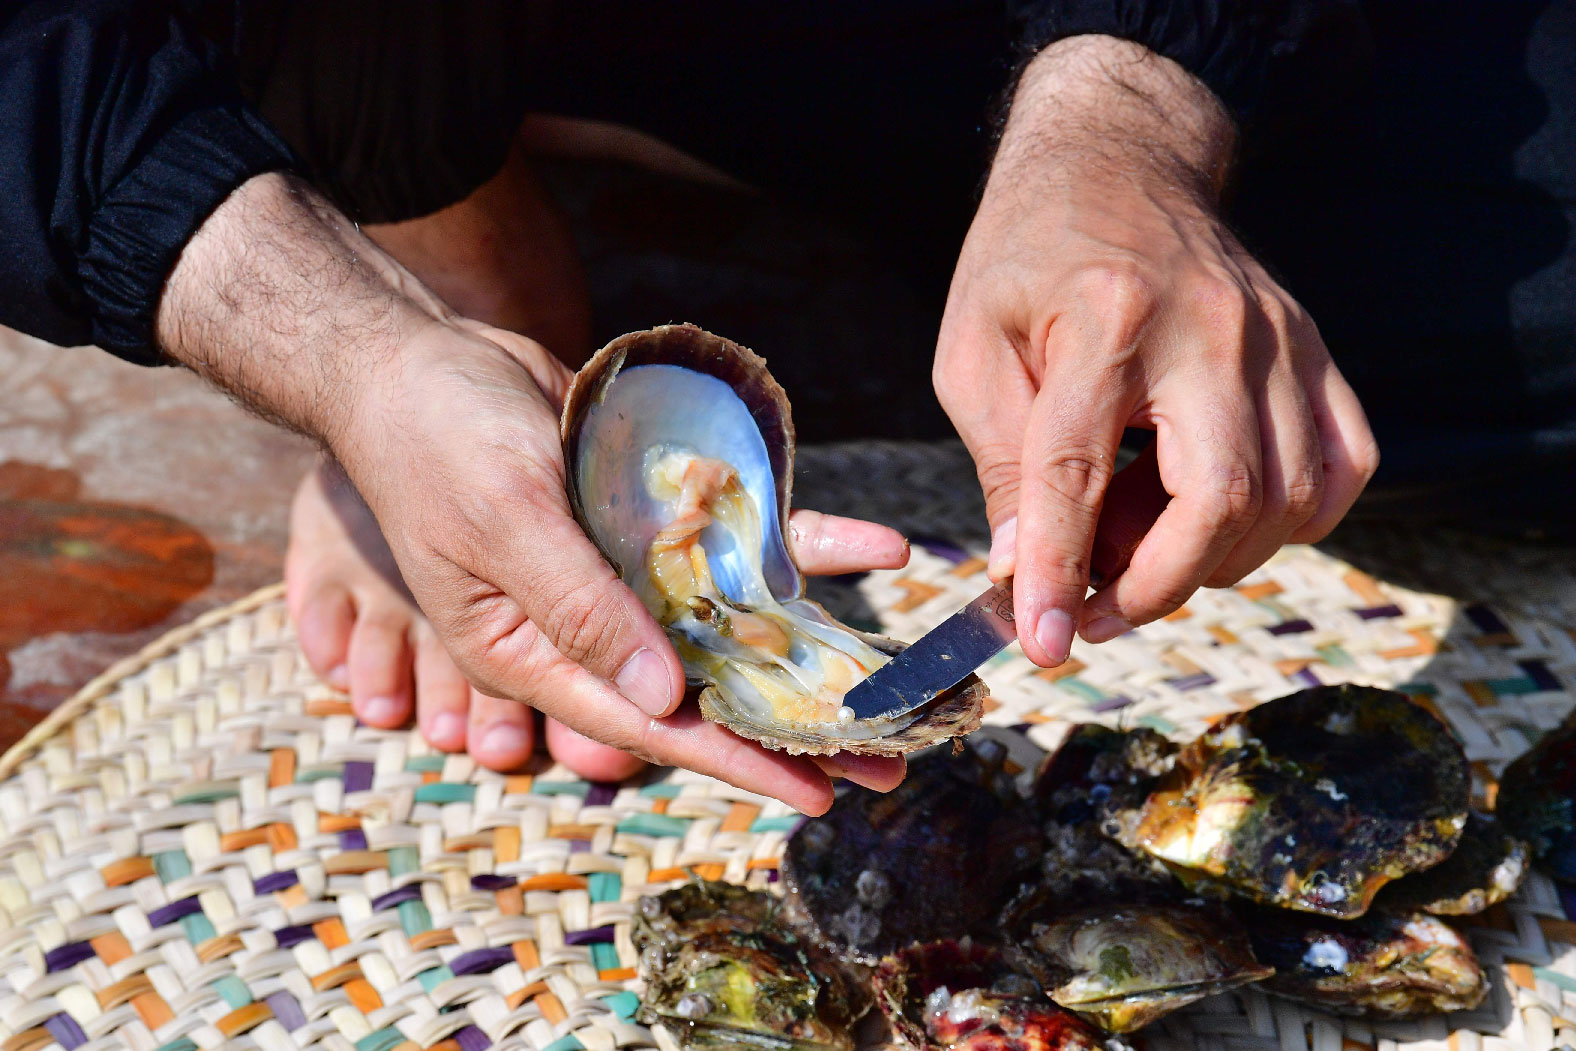 Abdullah al-Suwaidi displays a pearl found in an oyster at his pearl farm